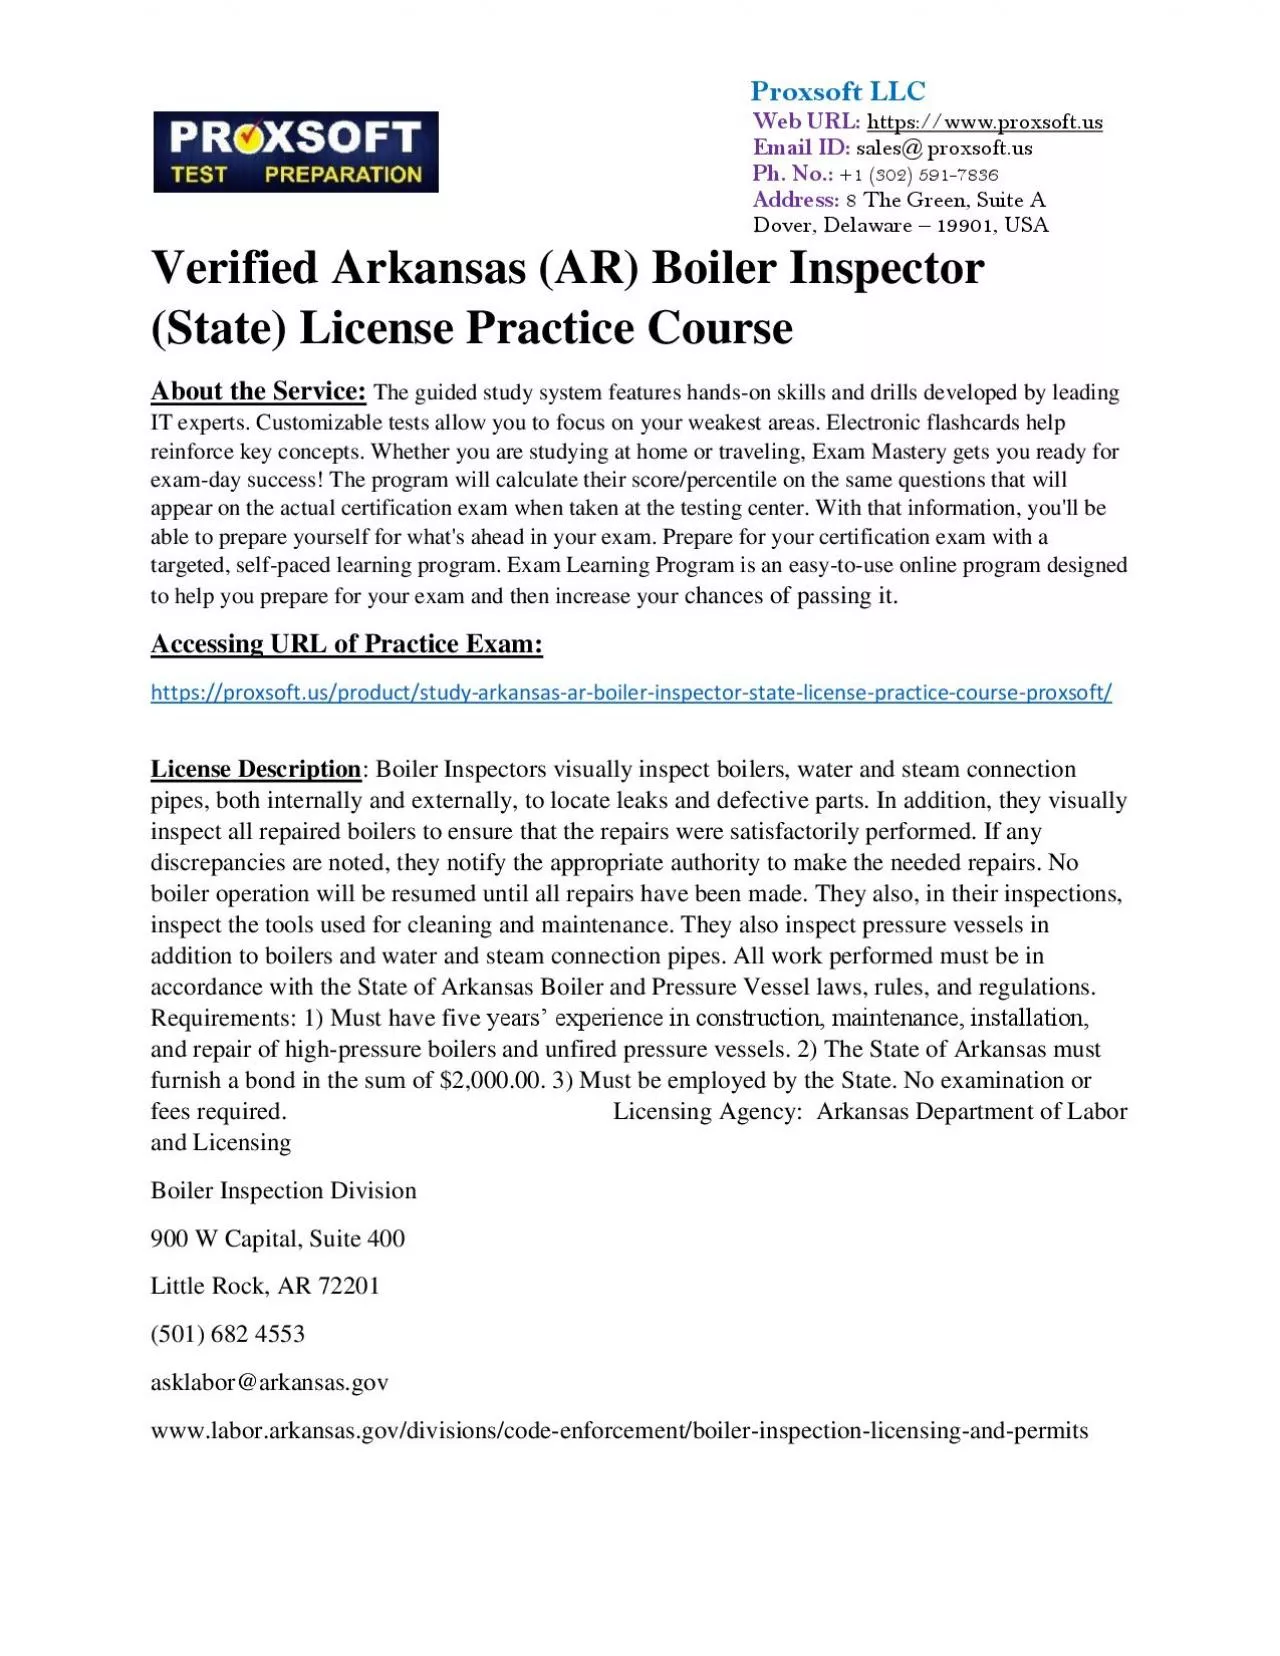 Verified Arkansas (AR) Boiler Inspector (State) License Practice Course